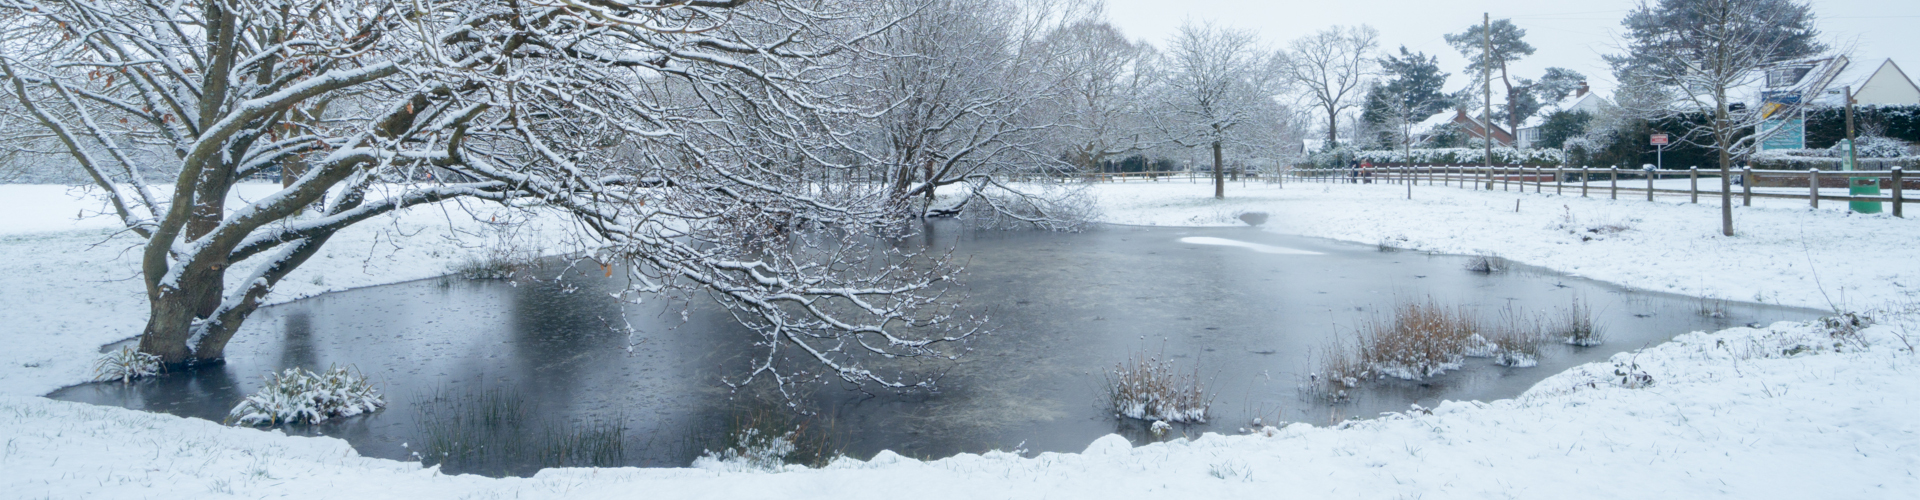 Mortimer pond in winter